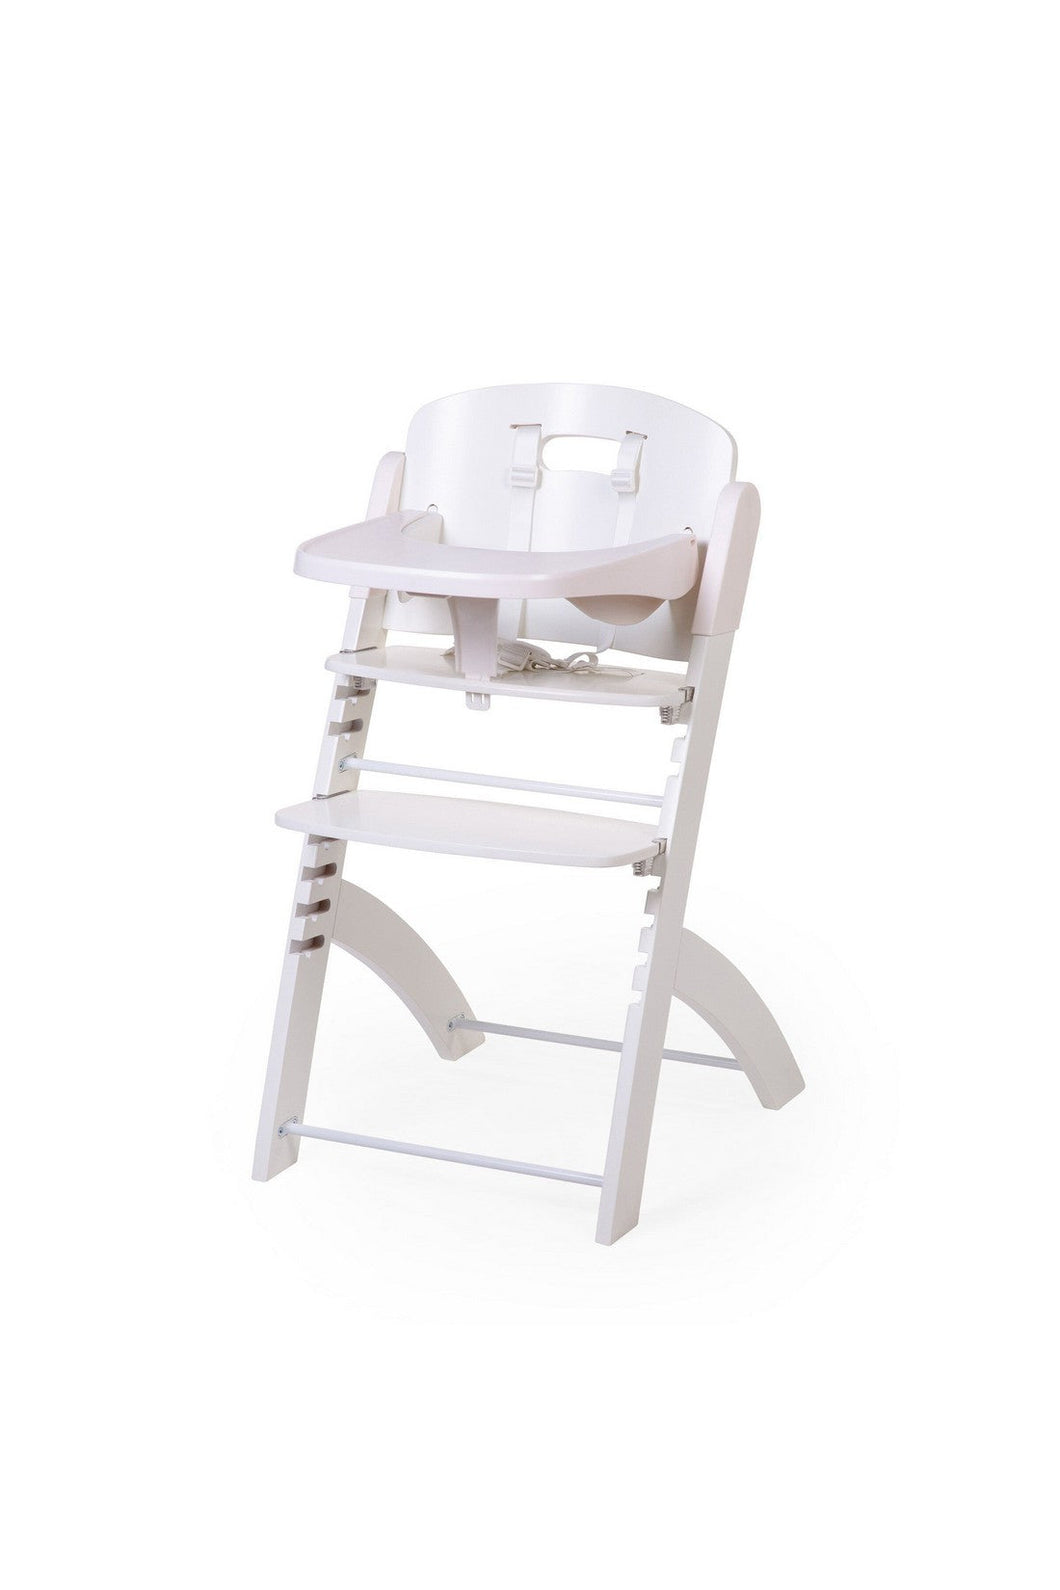 Childhome Evosit High Chair With Feeding Tray